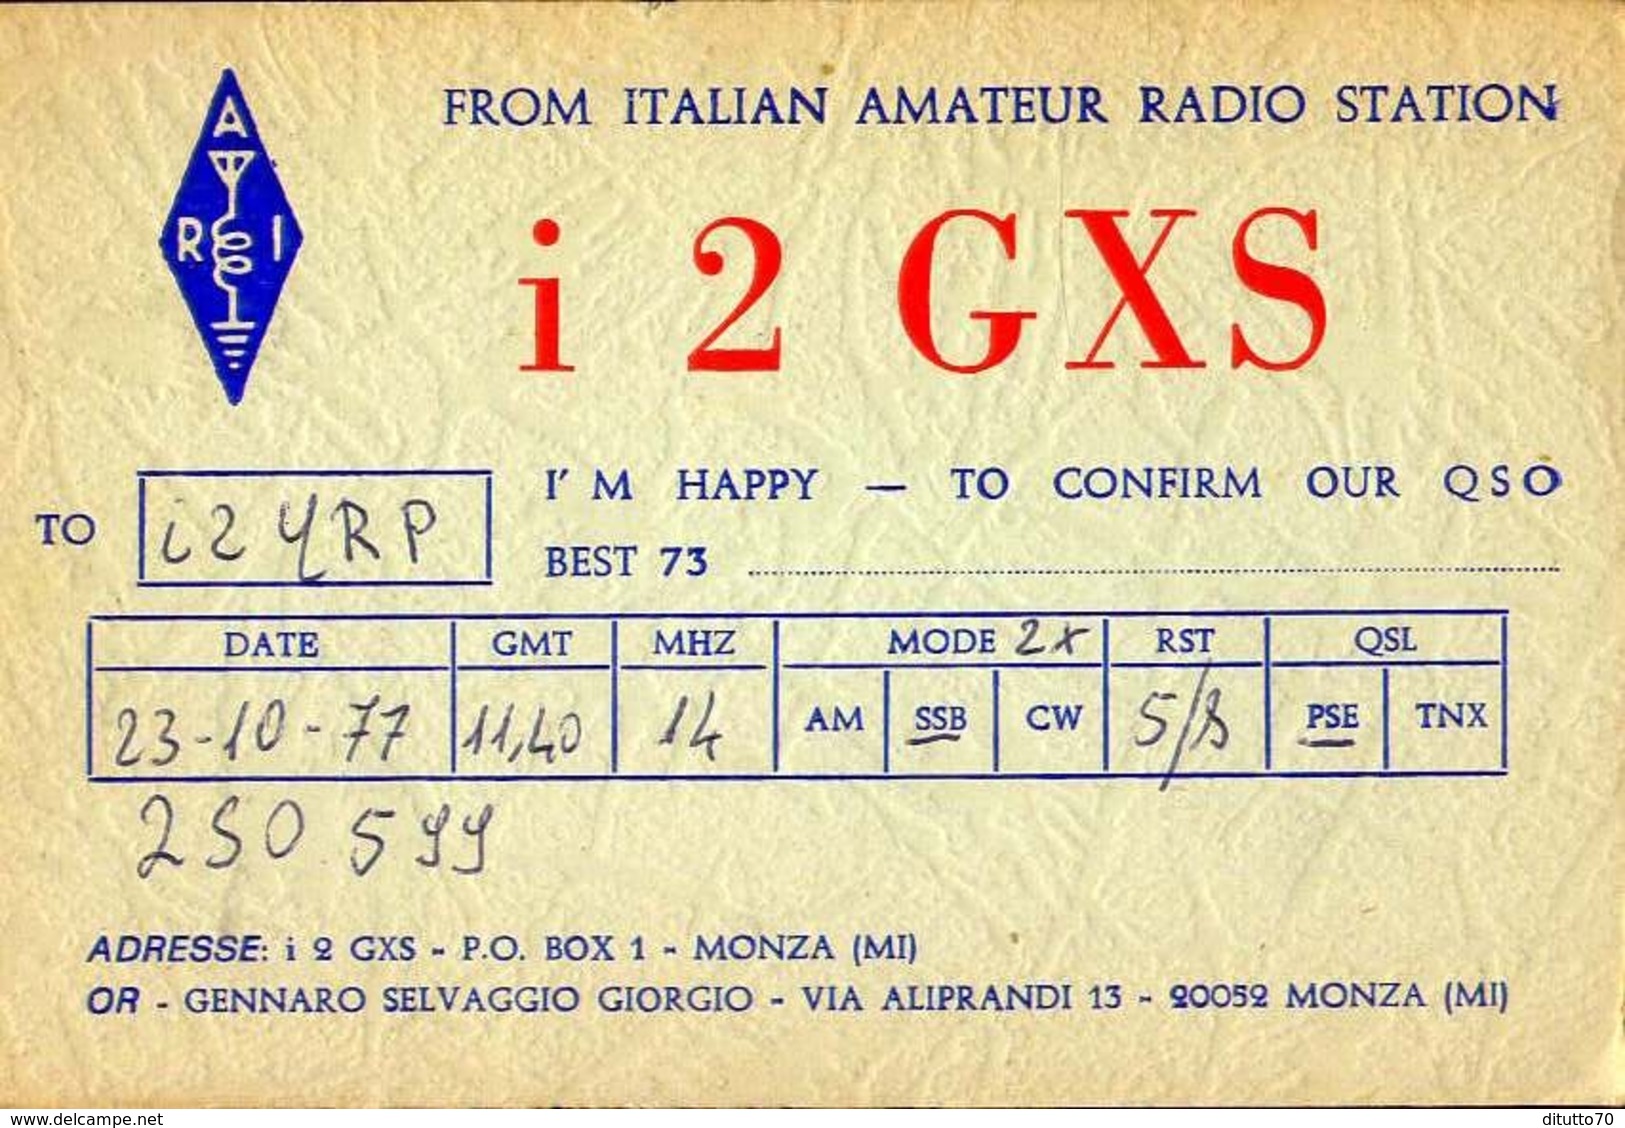 Radio - From Italian Amateur Radio Station - I2gxs - Monza - Radio Amatoriale